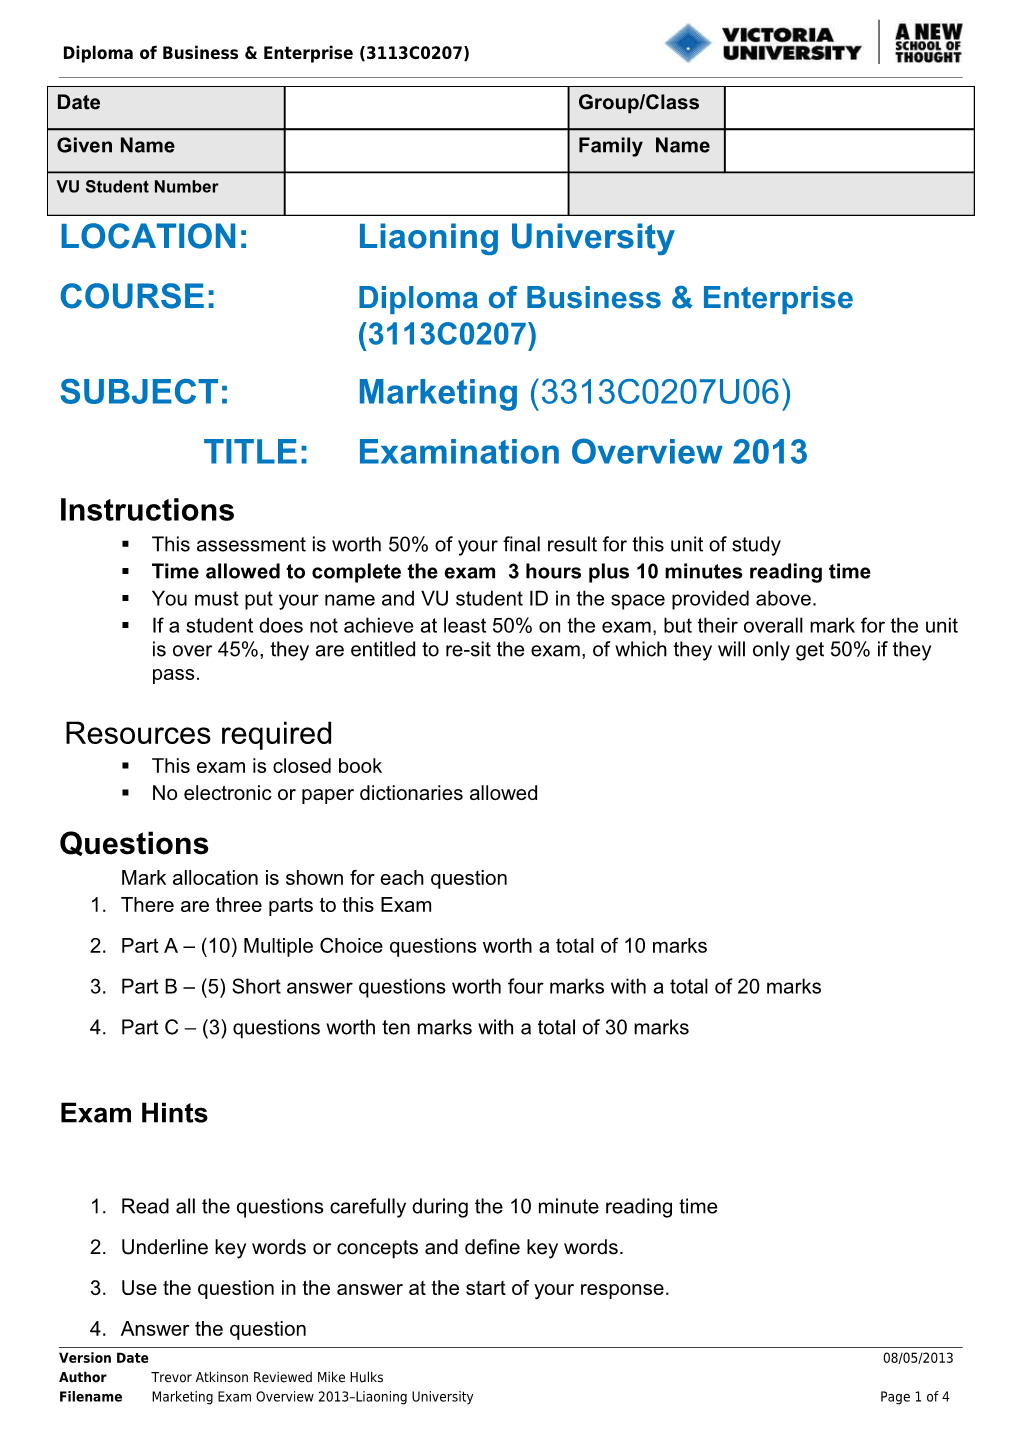 COURSE: Diploma of Business & Enterprise (3113C0207)